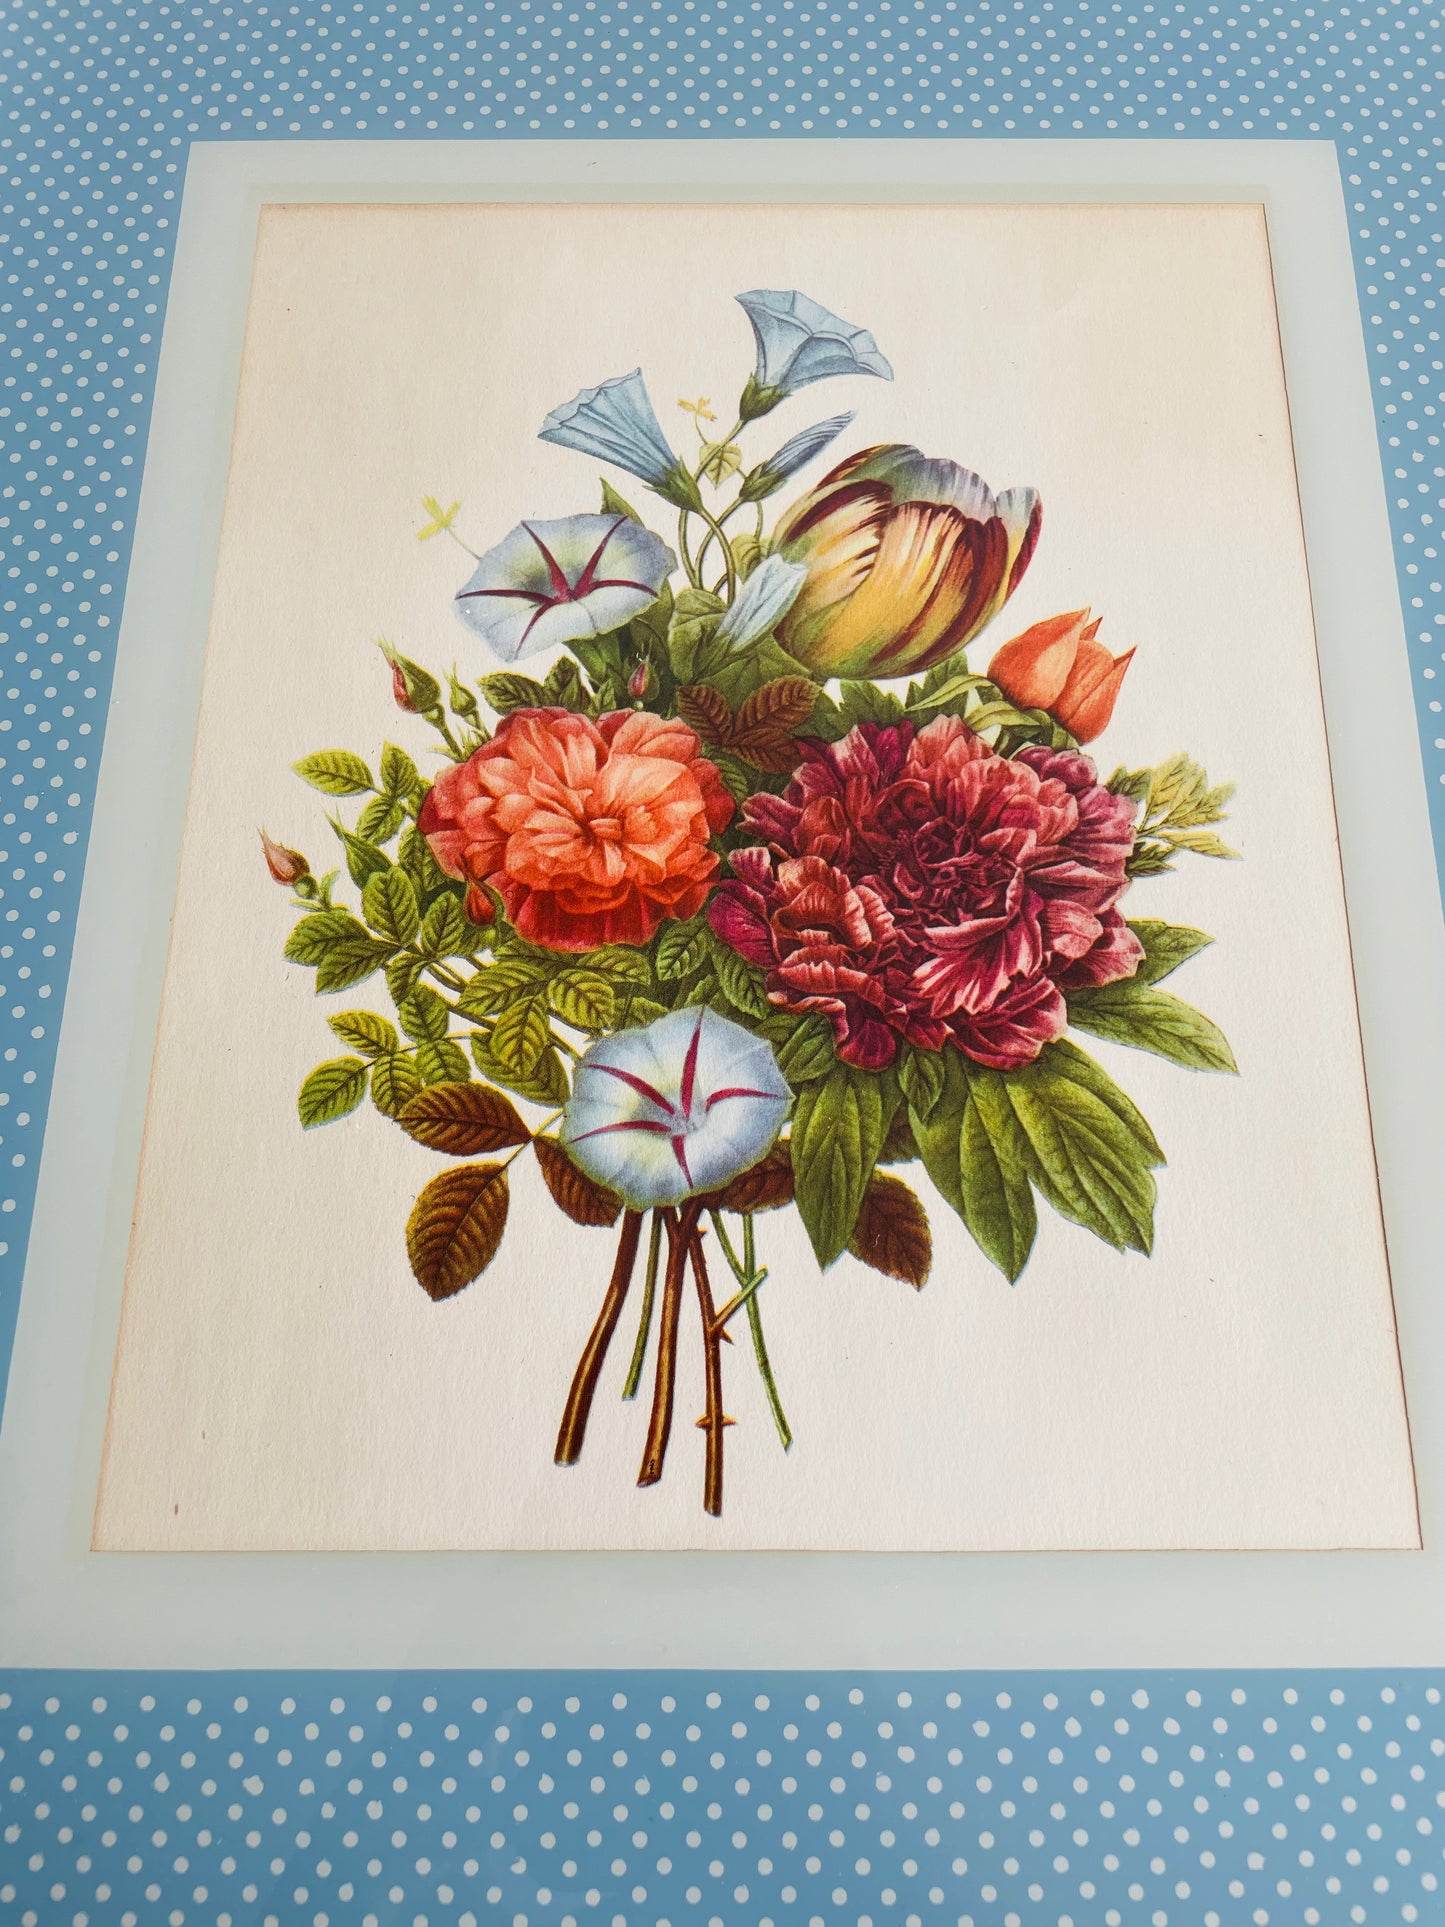 Framed Bouquet of Flowers - Botanical Print by J.L. Prevost